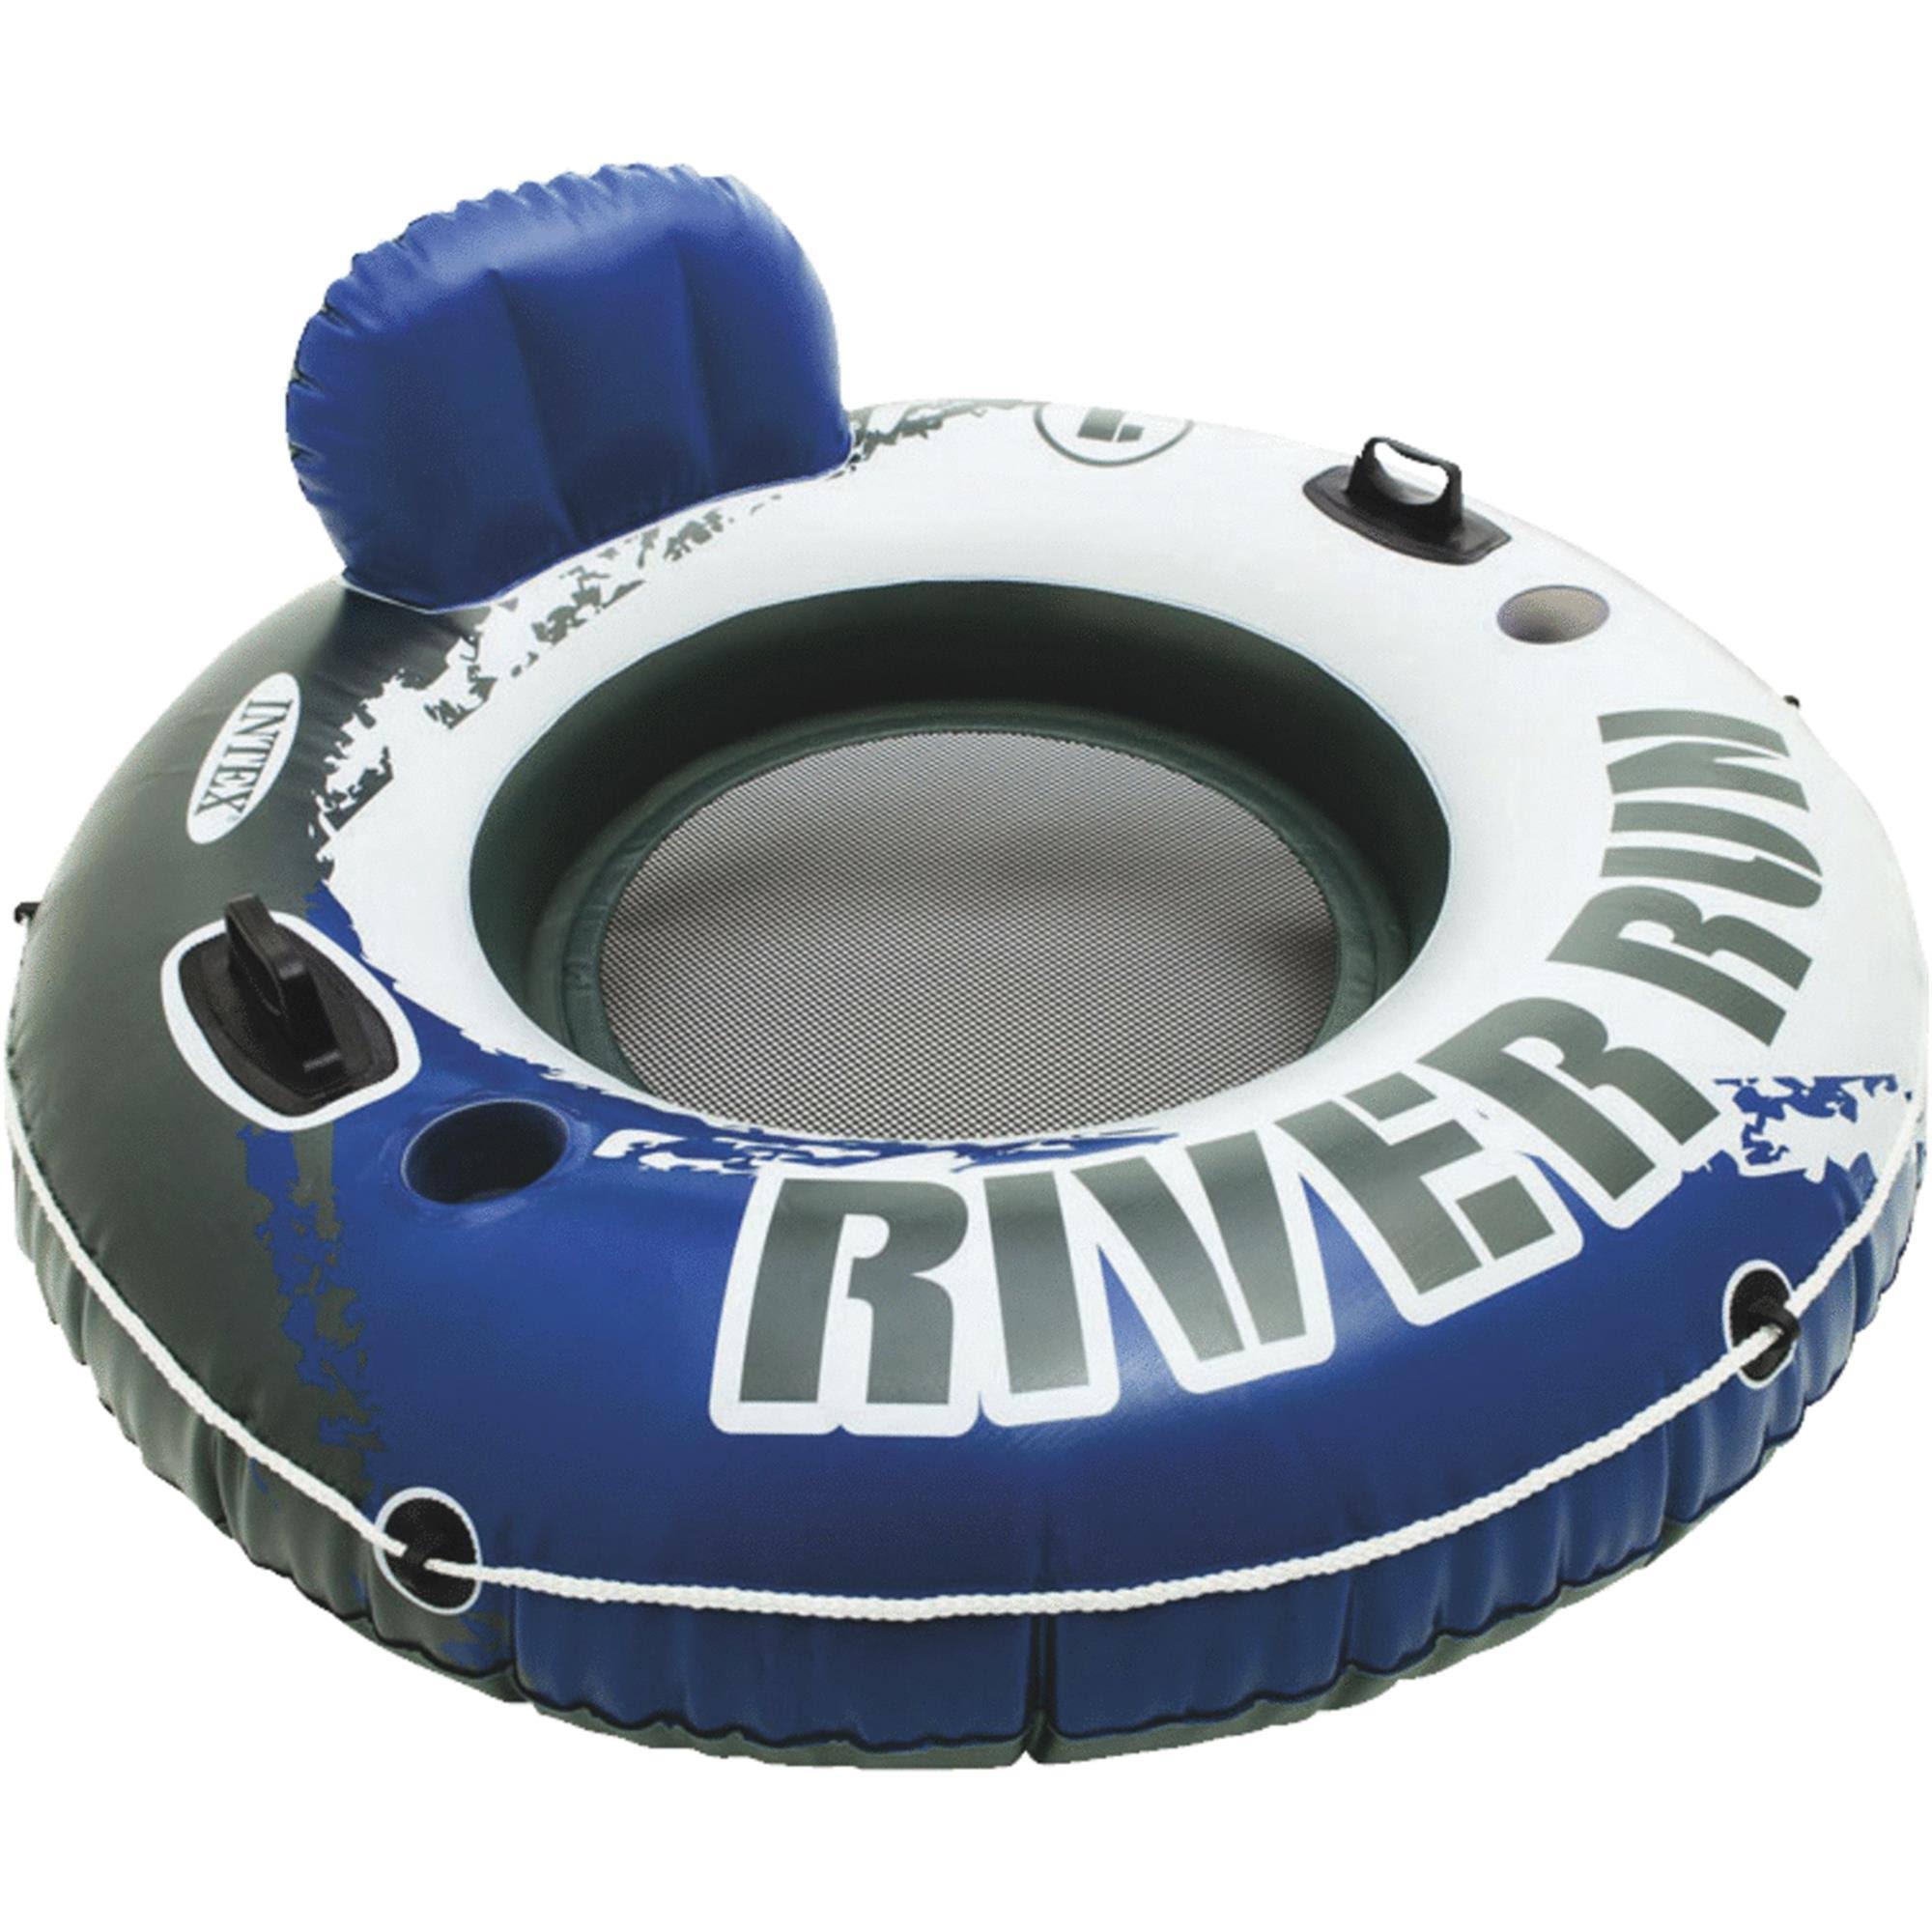 Intex River Run Sport Lounge Inflatable Water Float - 53"